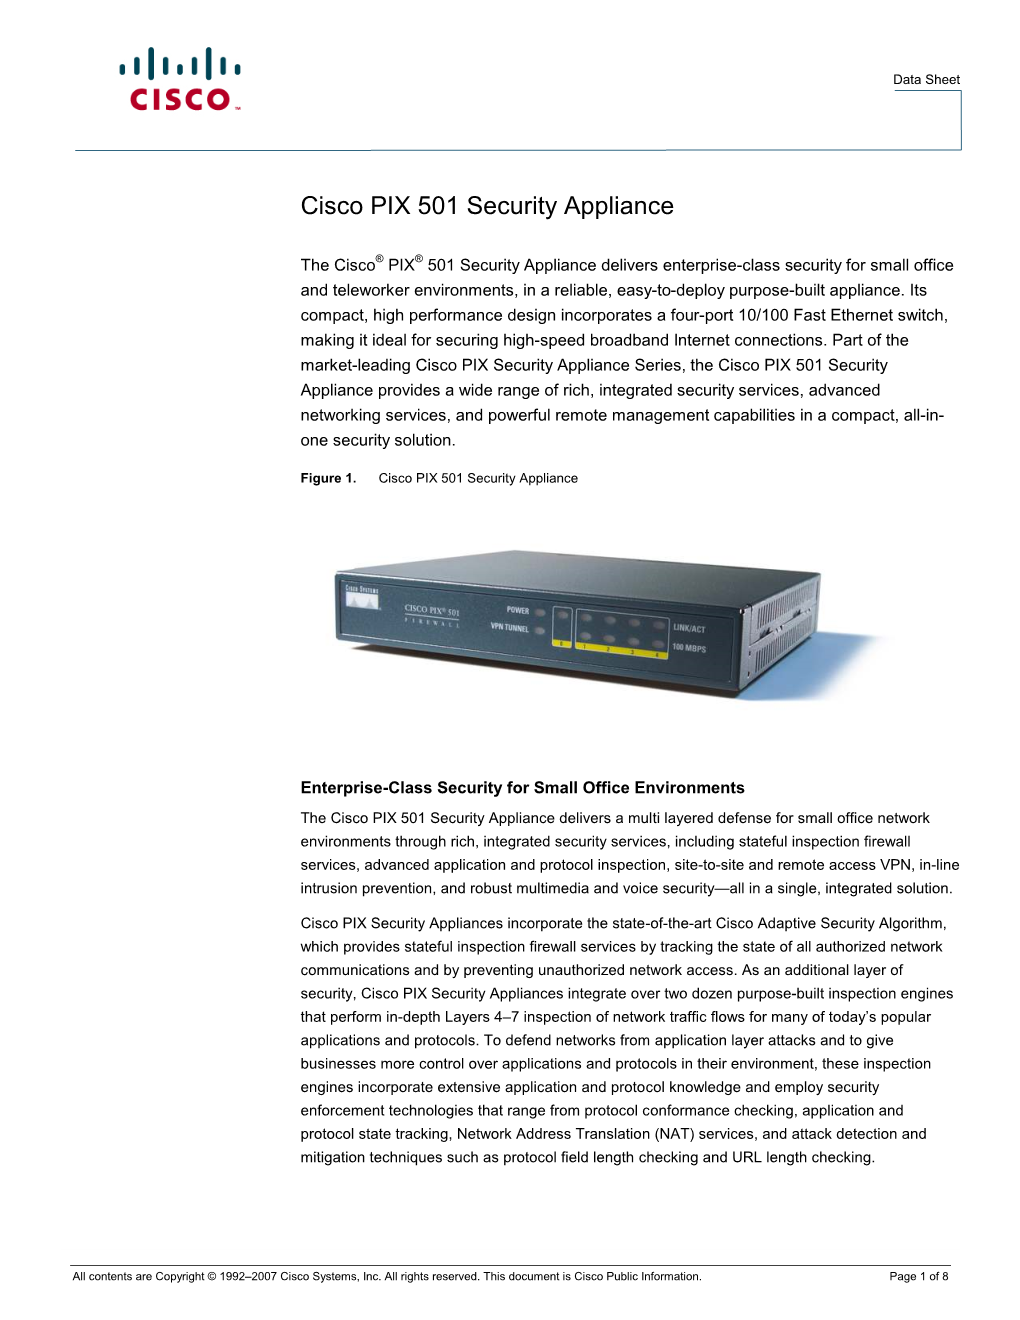 Cisco PIX 501 Security Appliance